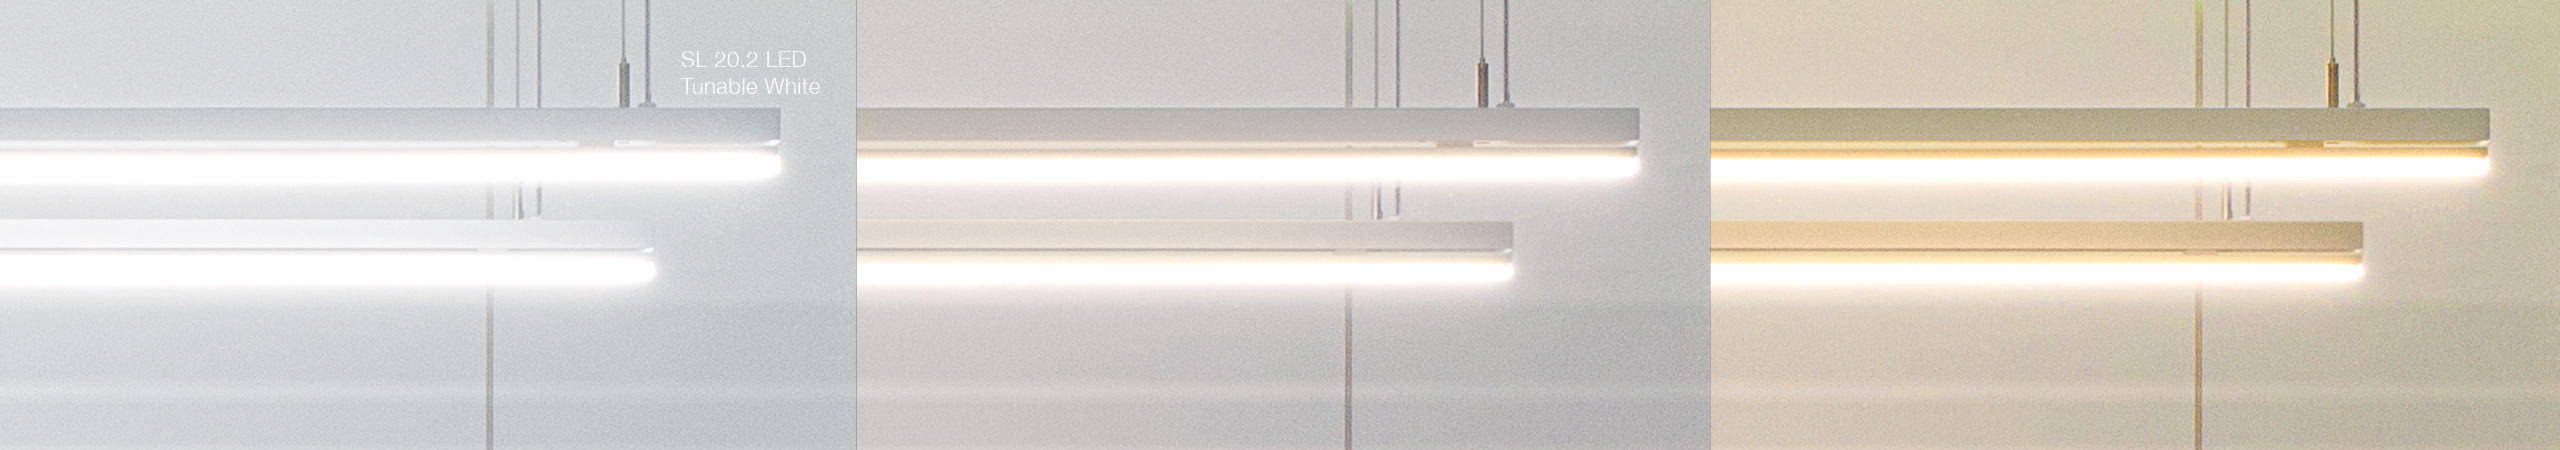 Luxsystem LED Leuchte Lichtband SL 20.2 tunable white